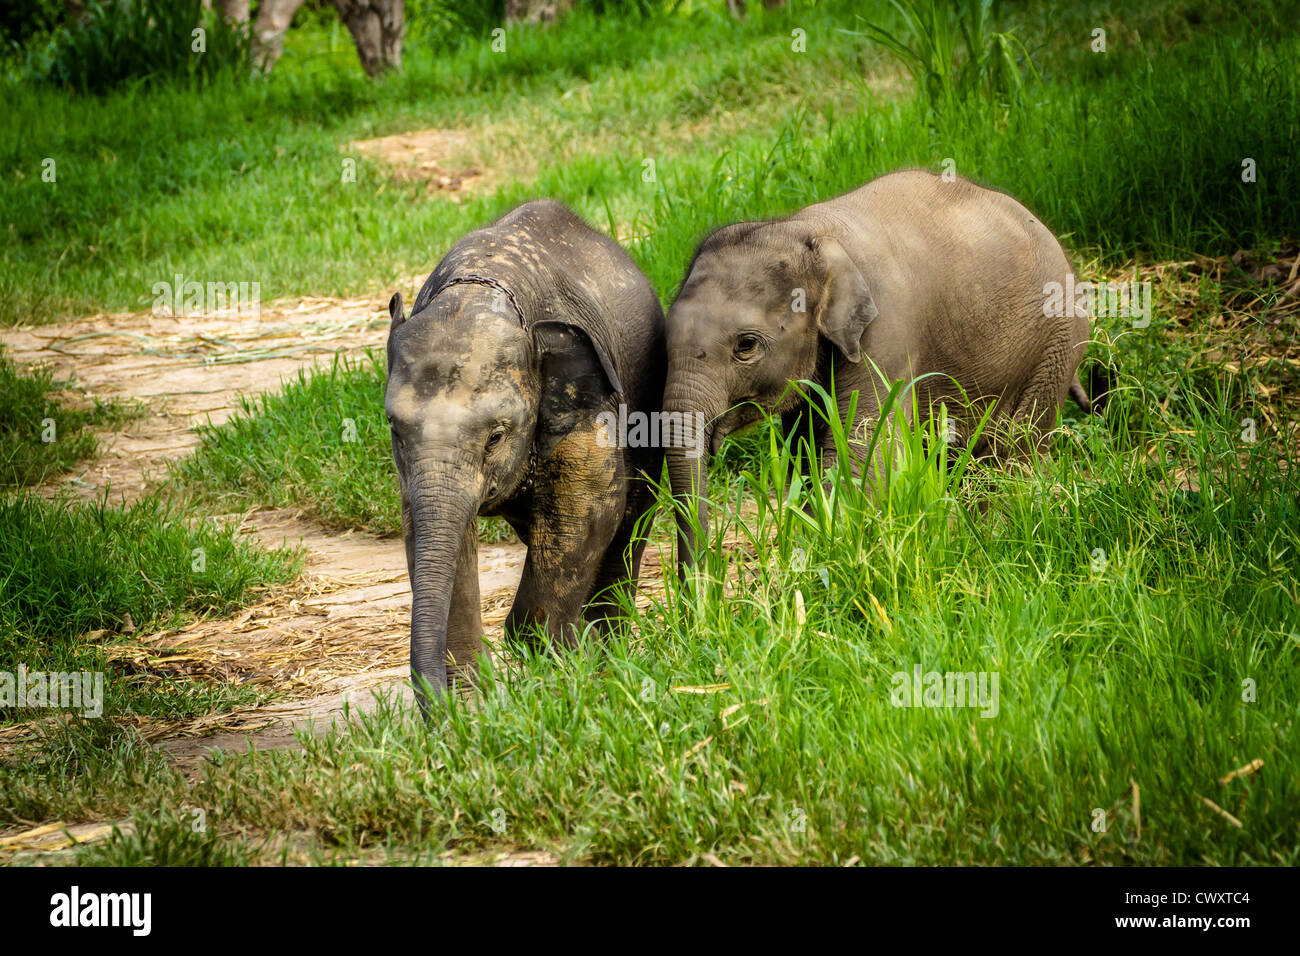 CHIANG MAI, THAILAND - 16. Juni 2012: Zwei Baby-Elefanten in Grünland Feld spielen. Stockfoto